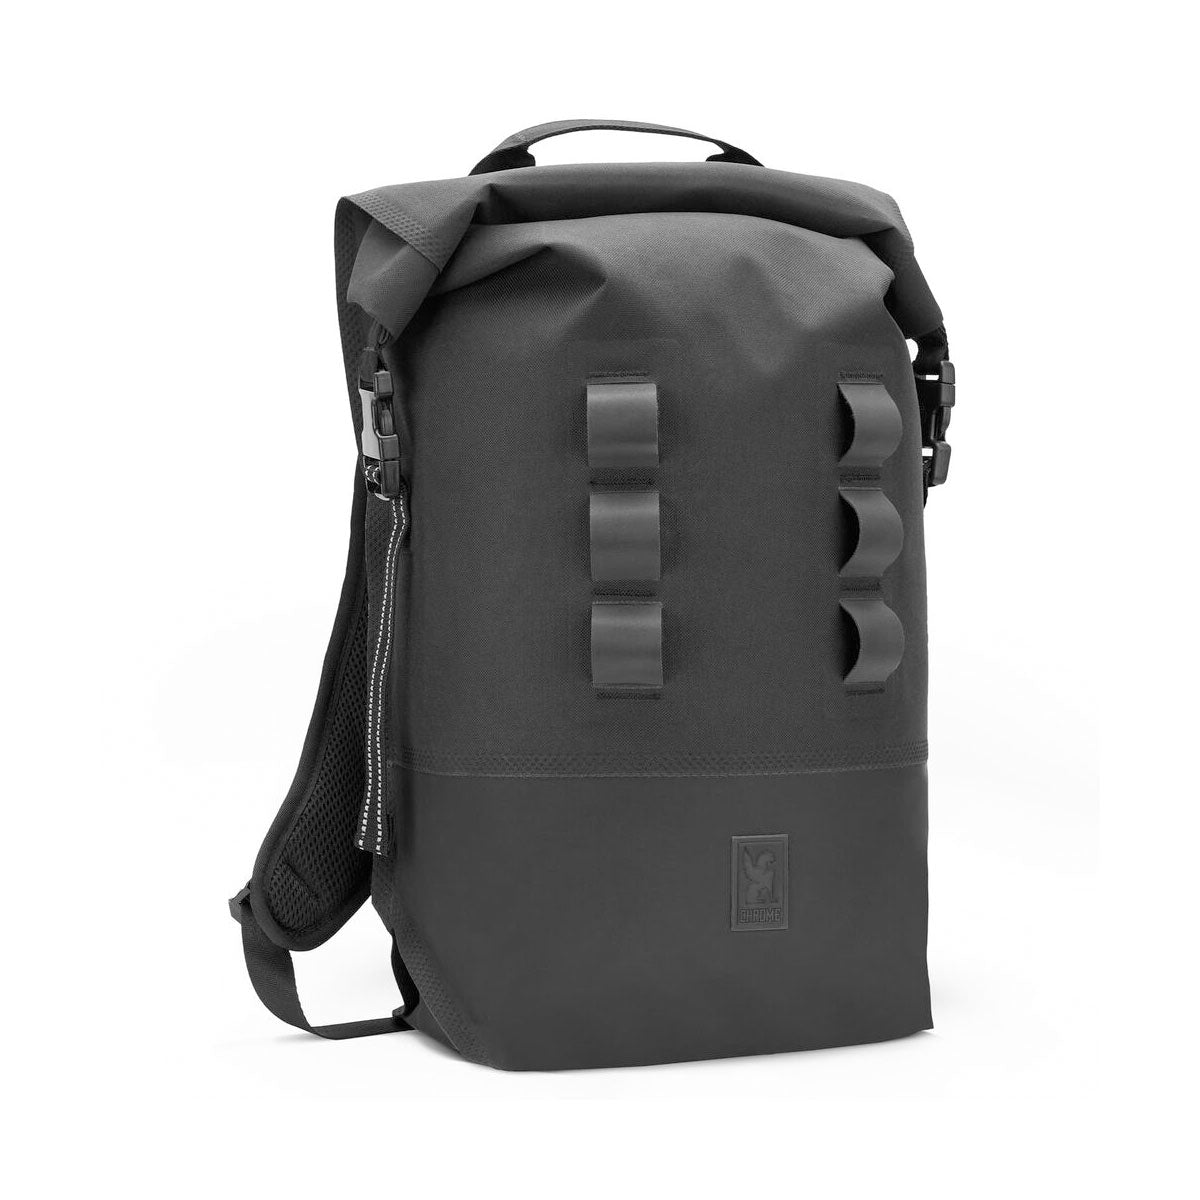 [PO] Chrome Industries : Urban Ex 2.0 Rolltop 20L Backpack : Black